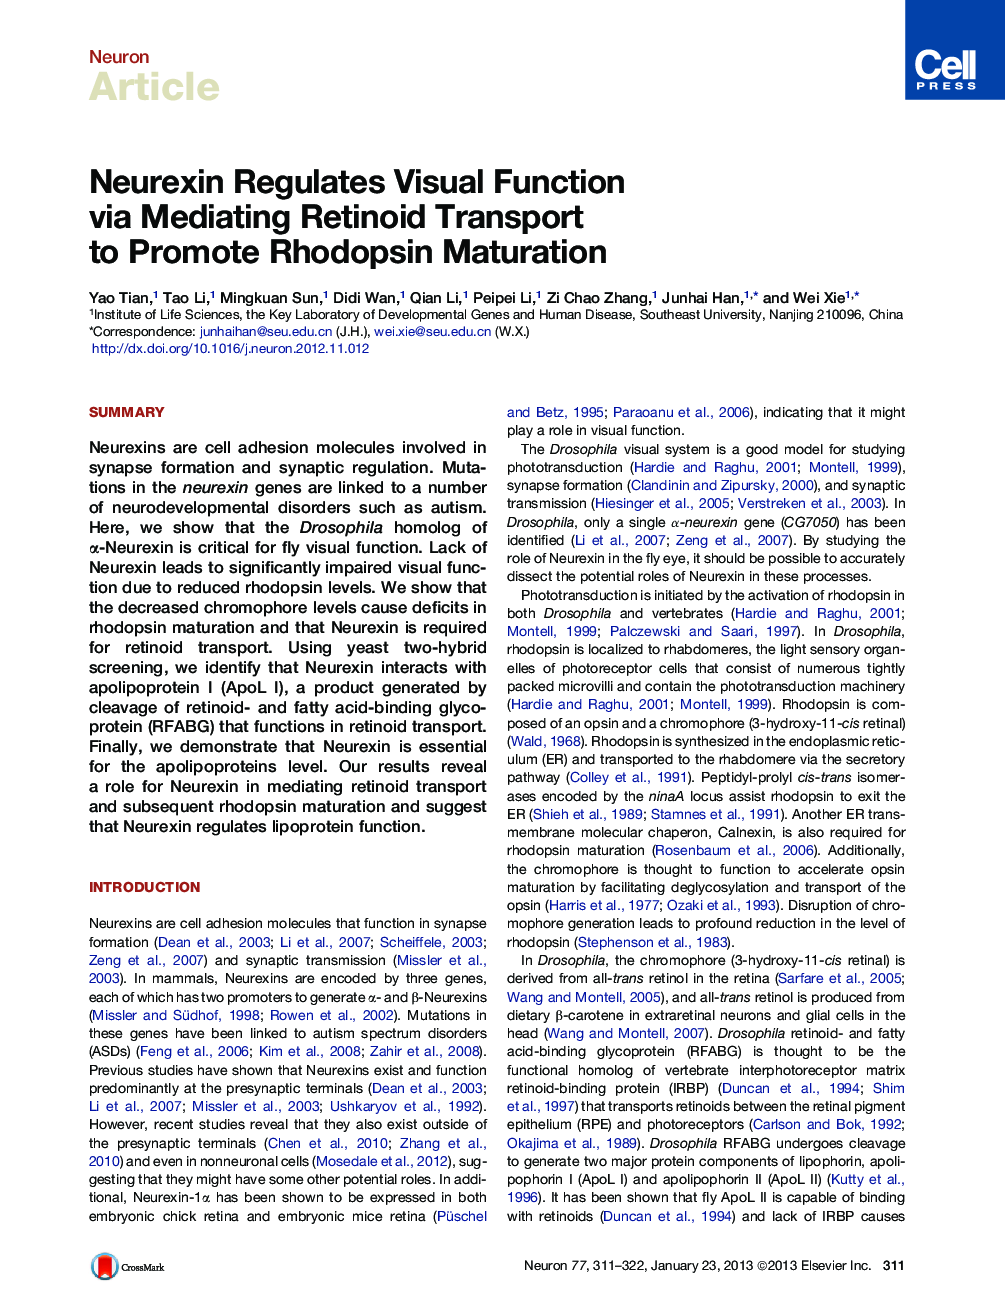 Neurexin Regulates Visual Function via Mediating Retinoid Transport to Promote Rhodopsin Maturation